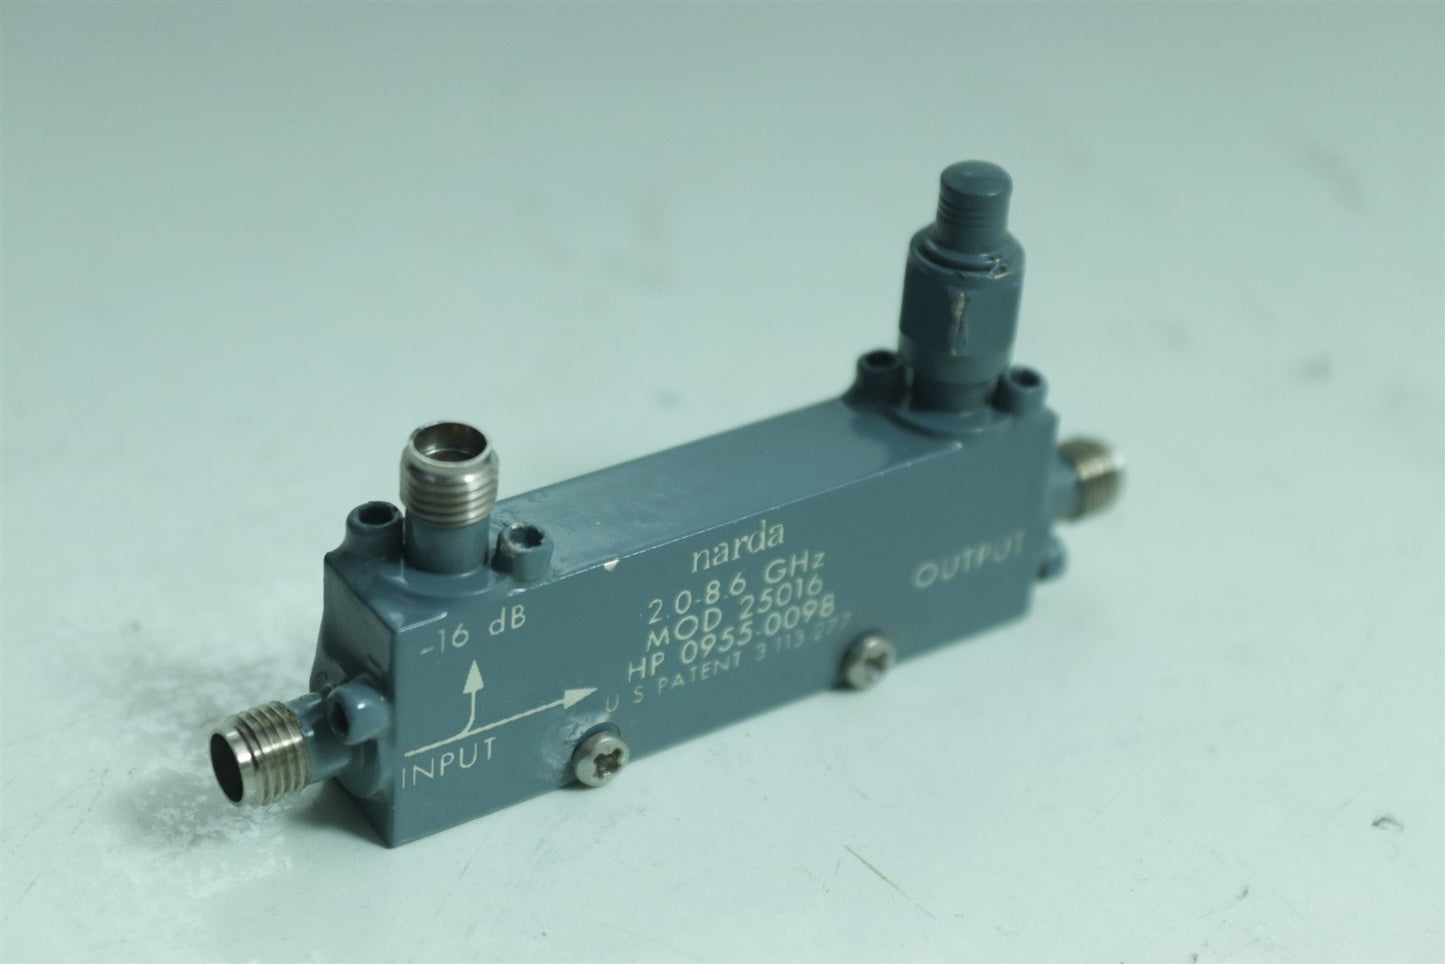 Narda 25016 RF Microwave Directional Coupler 2-8.6GHz 16dB coupling 0955-0098